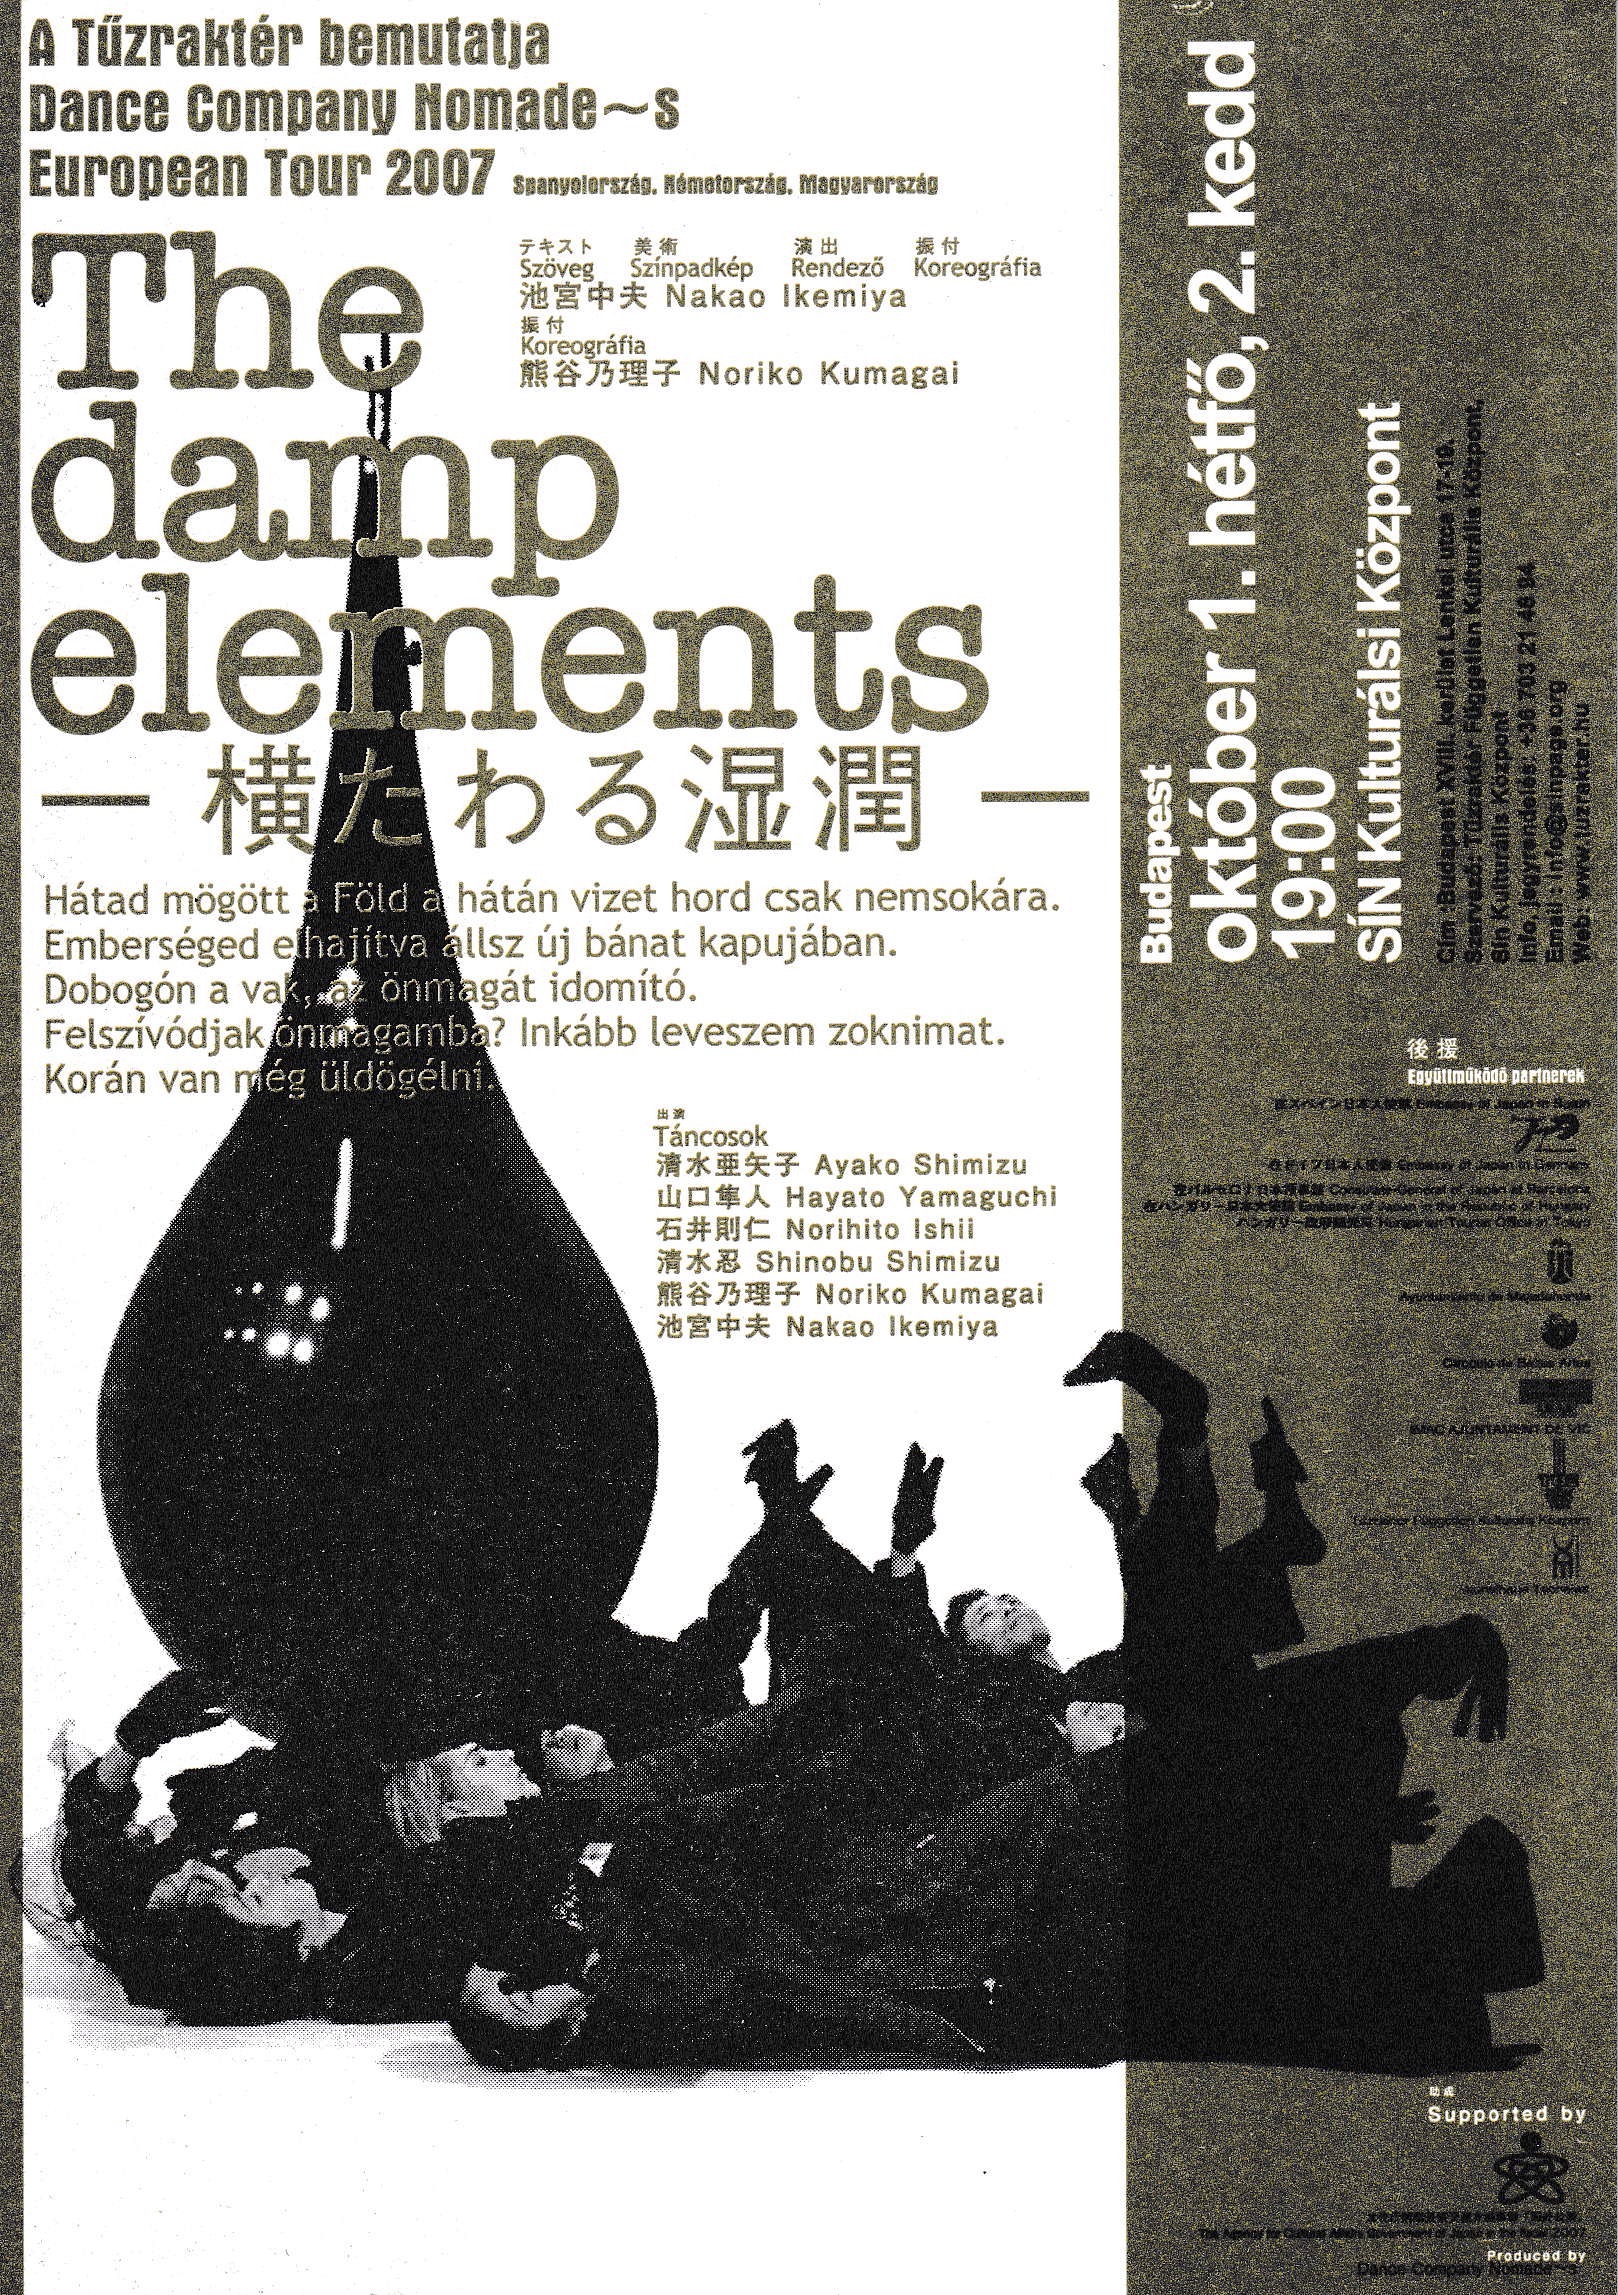 The damp elements 〜横たわる湿潤〜